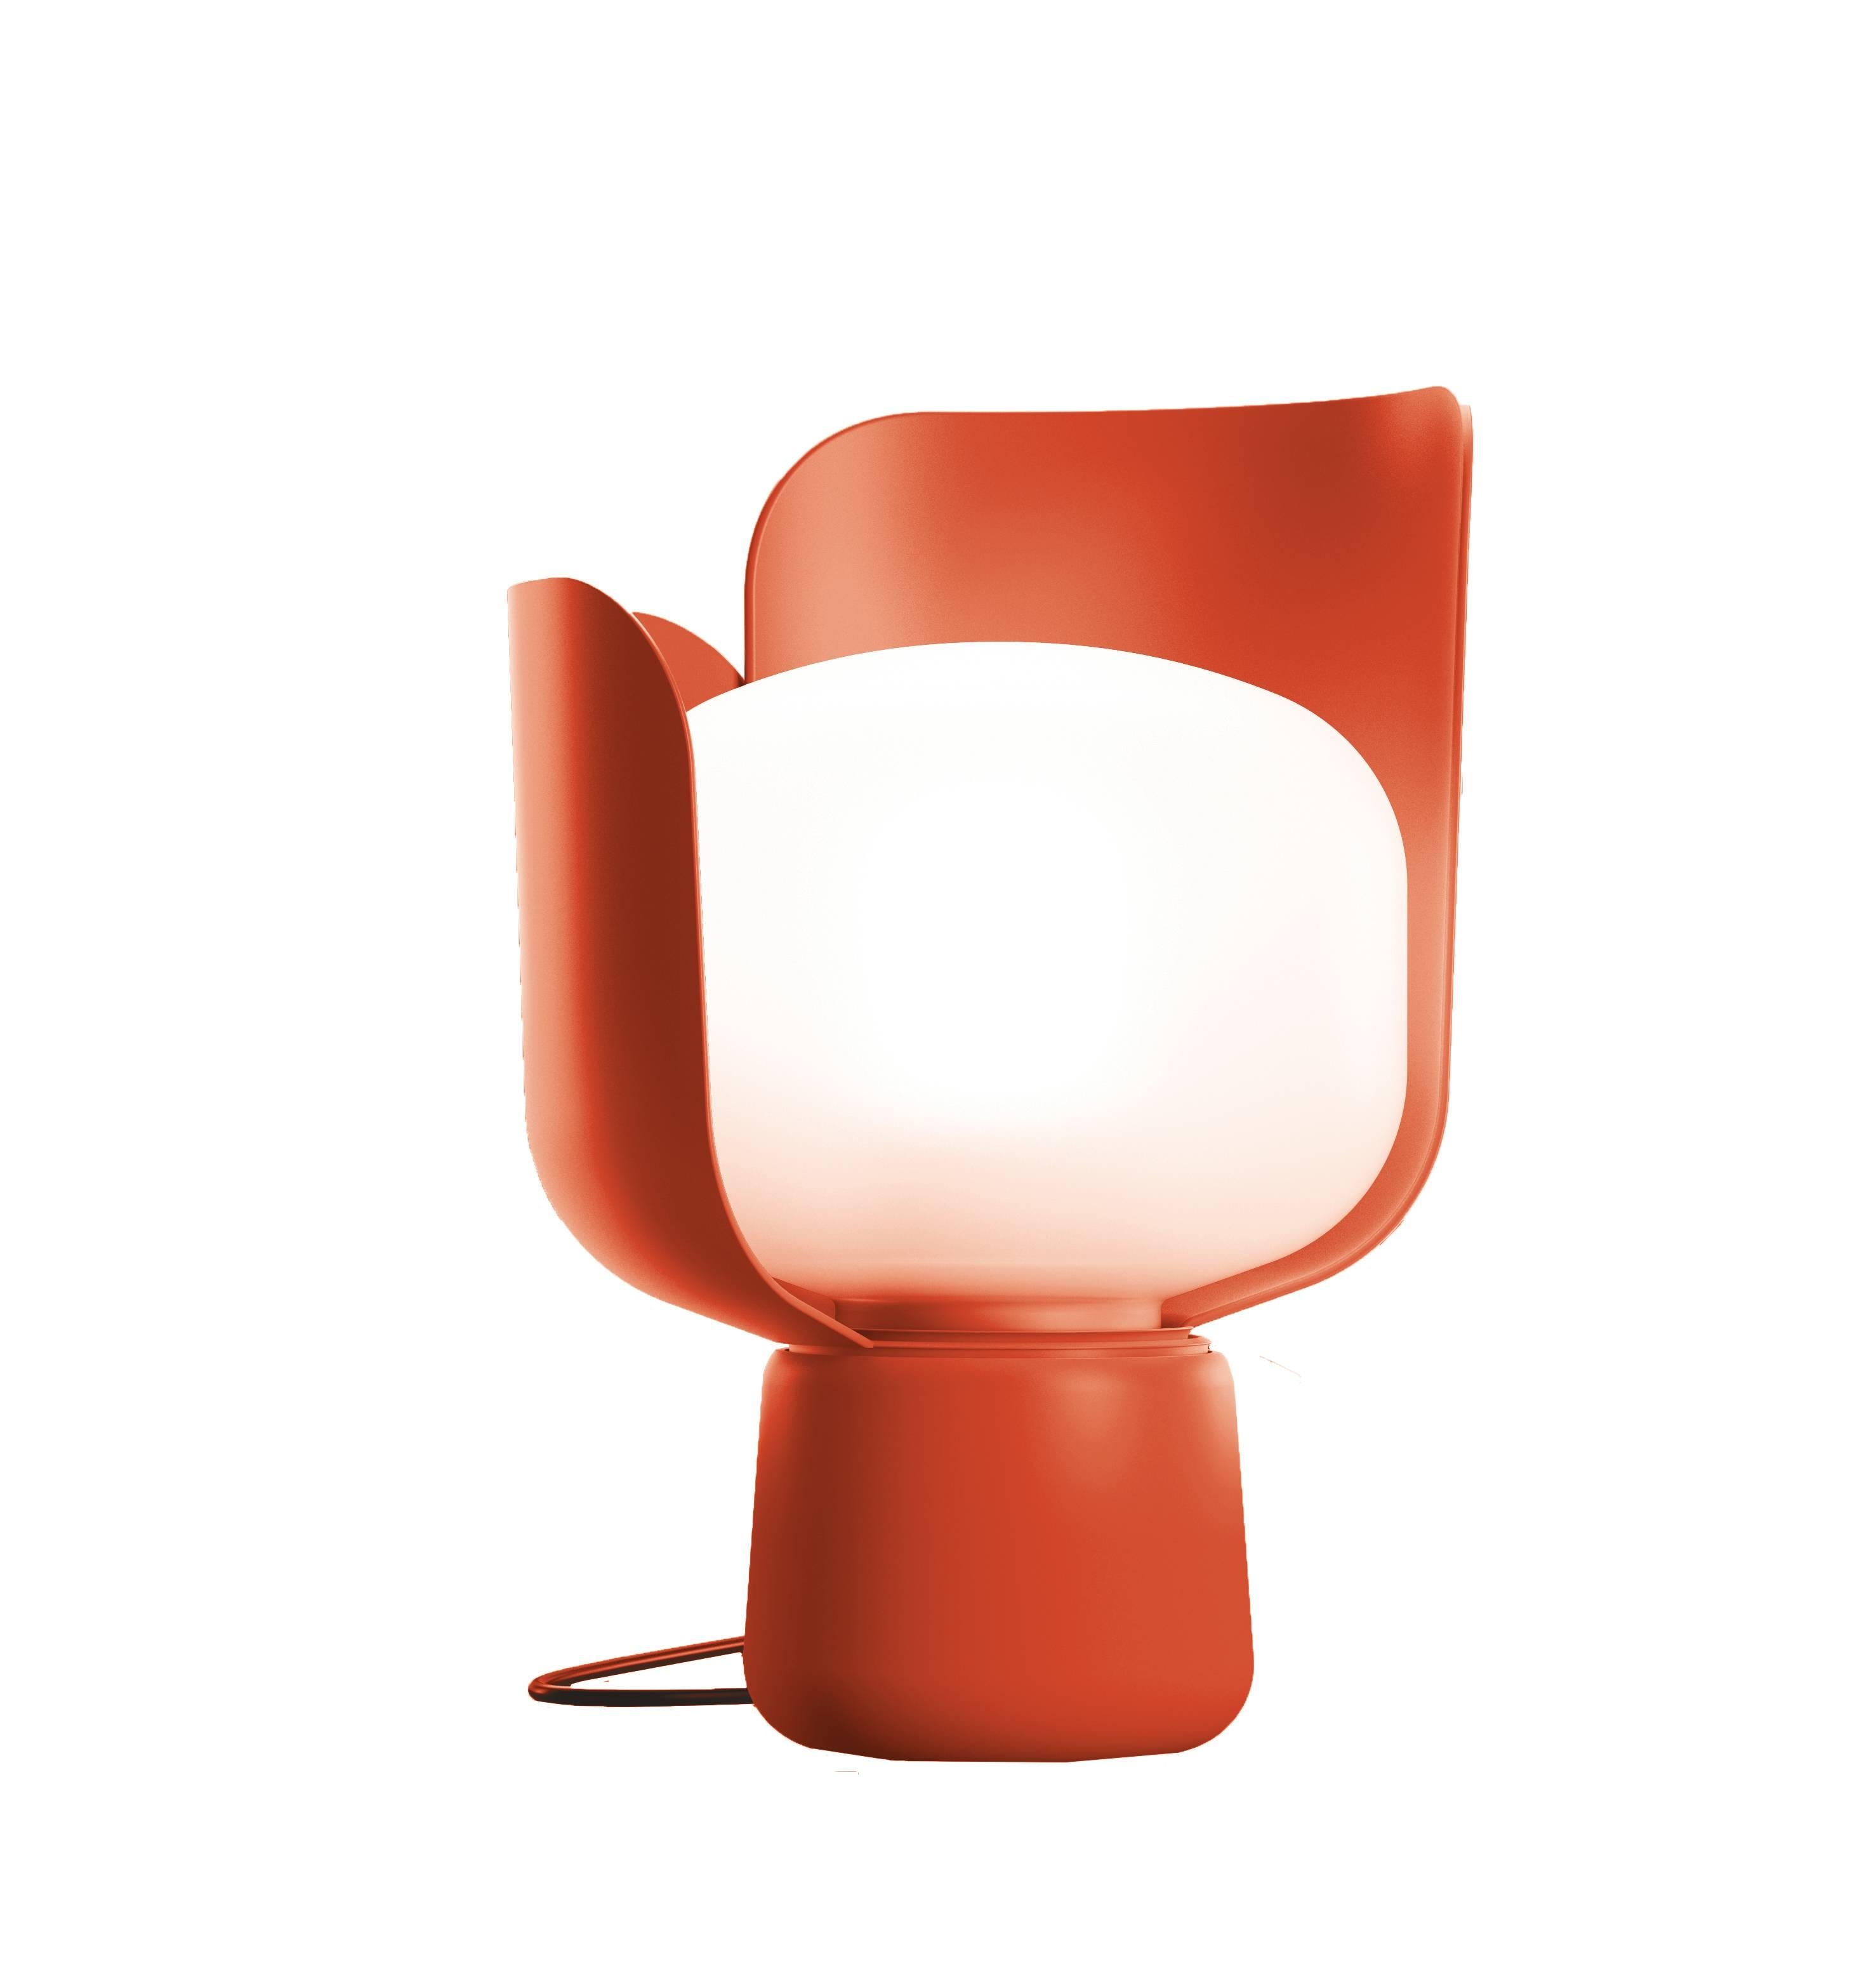 Aluminum BLOM Table Lamp Designed by Andreas Engesvik for Fontana Arte